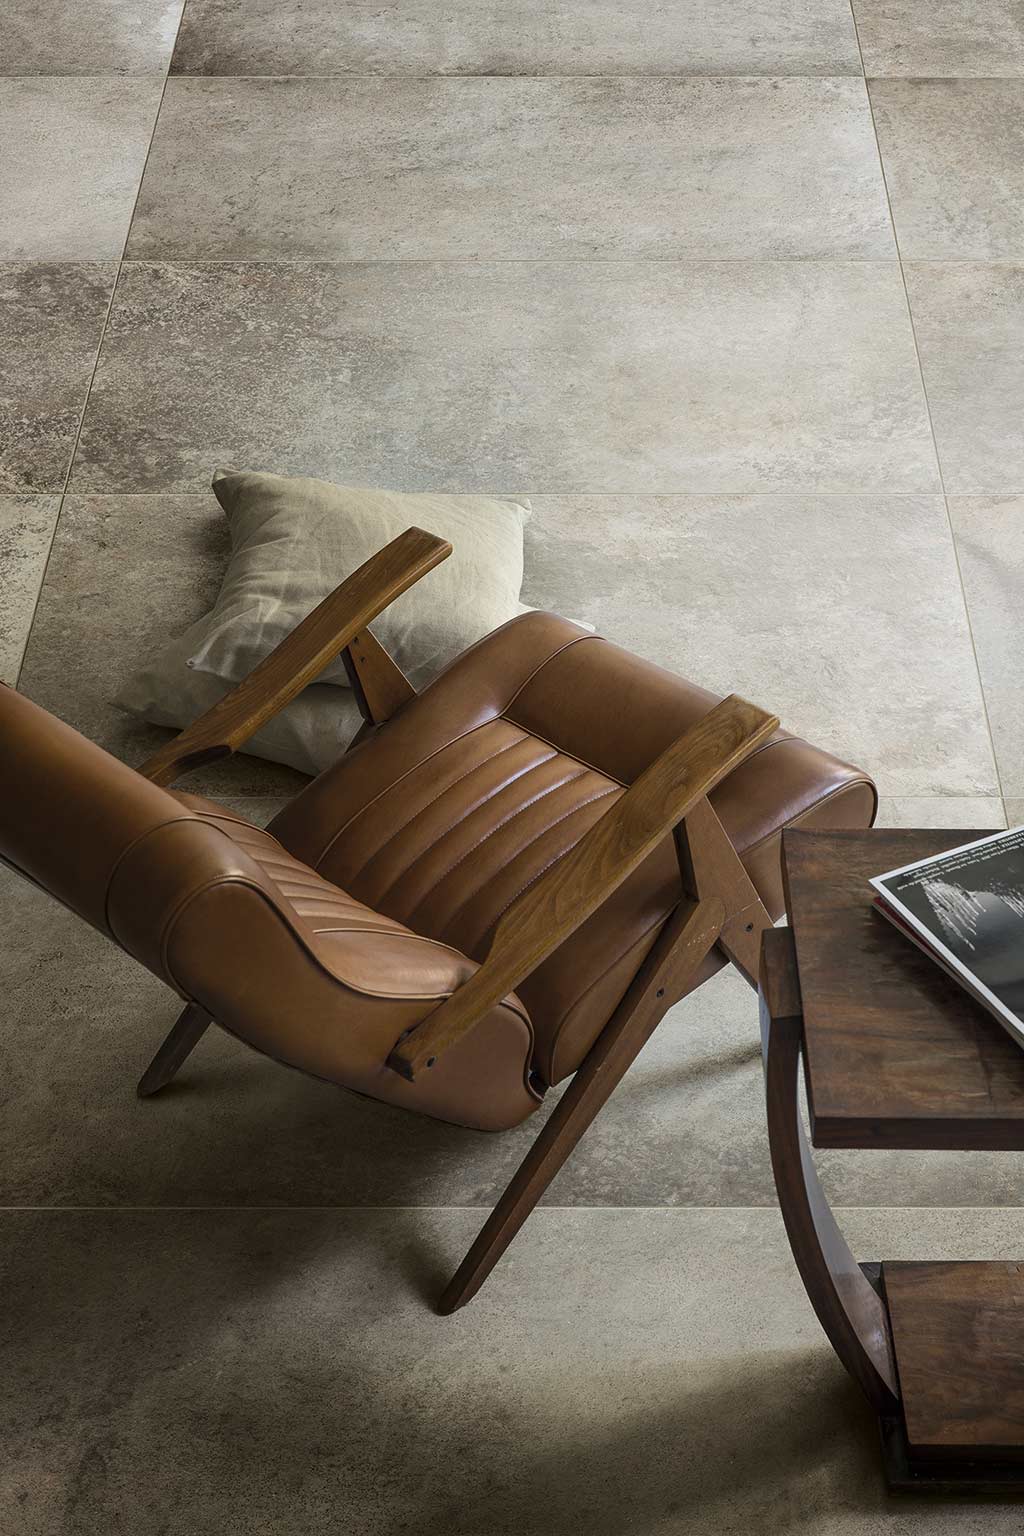 Modern Floor & Wall Tiles - Casa dolce casa - Casamood | Florim S.p.A.